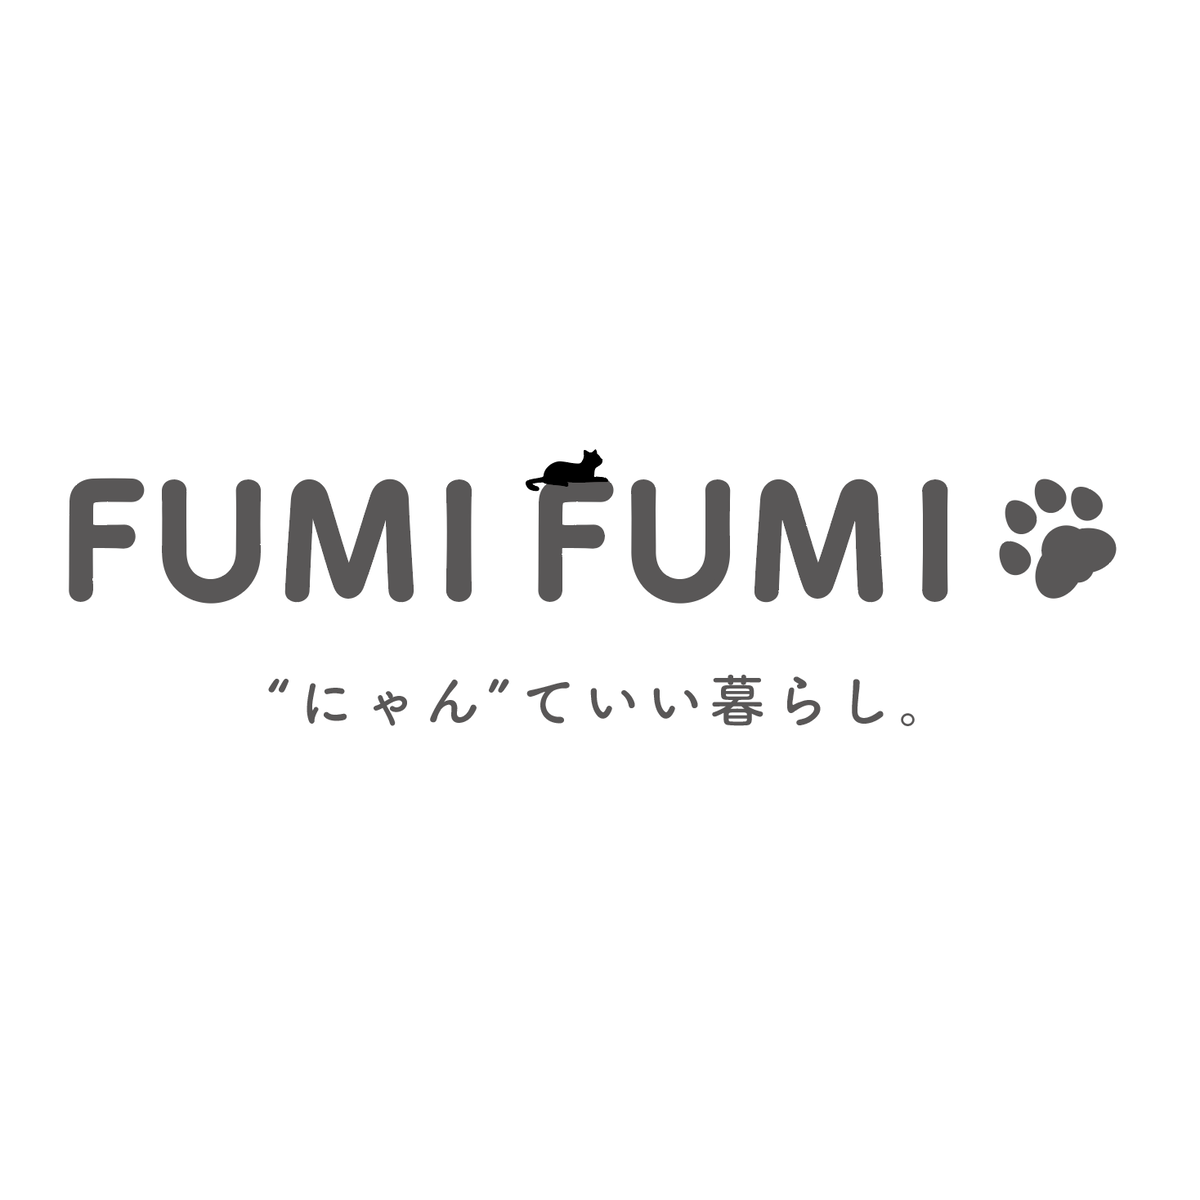 Fumi Fumi 猫さんのグッズ 遊び道具 爪研ぎ おうちを販売しています